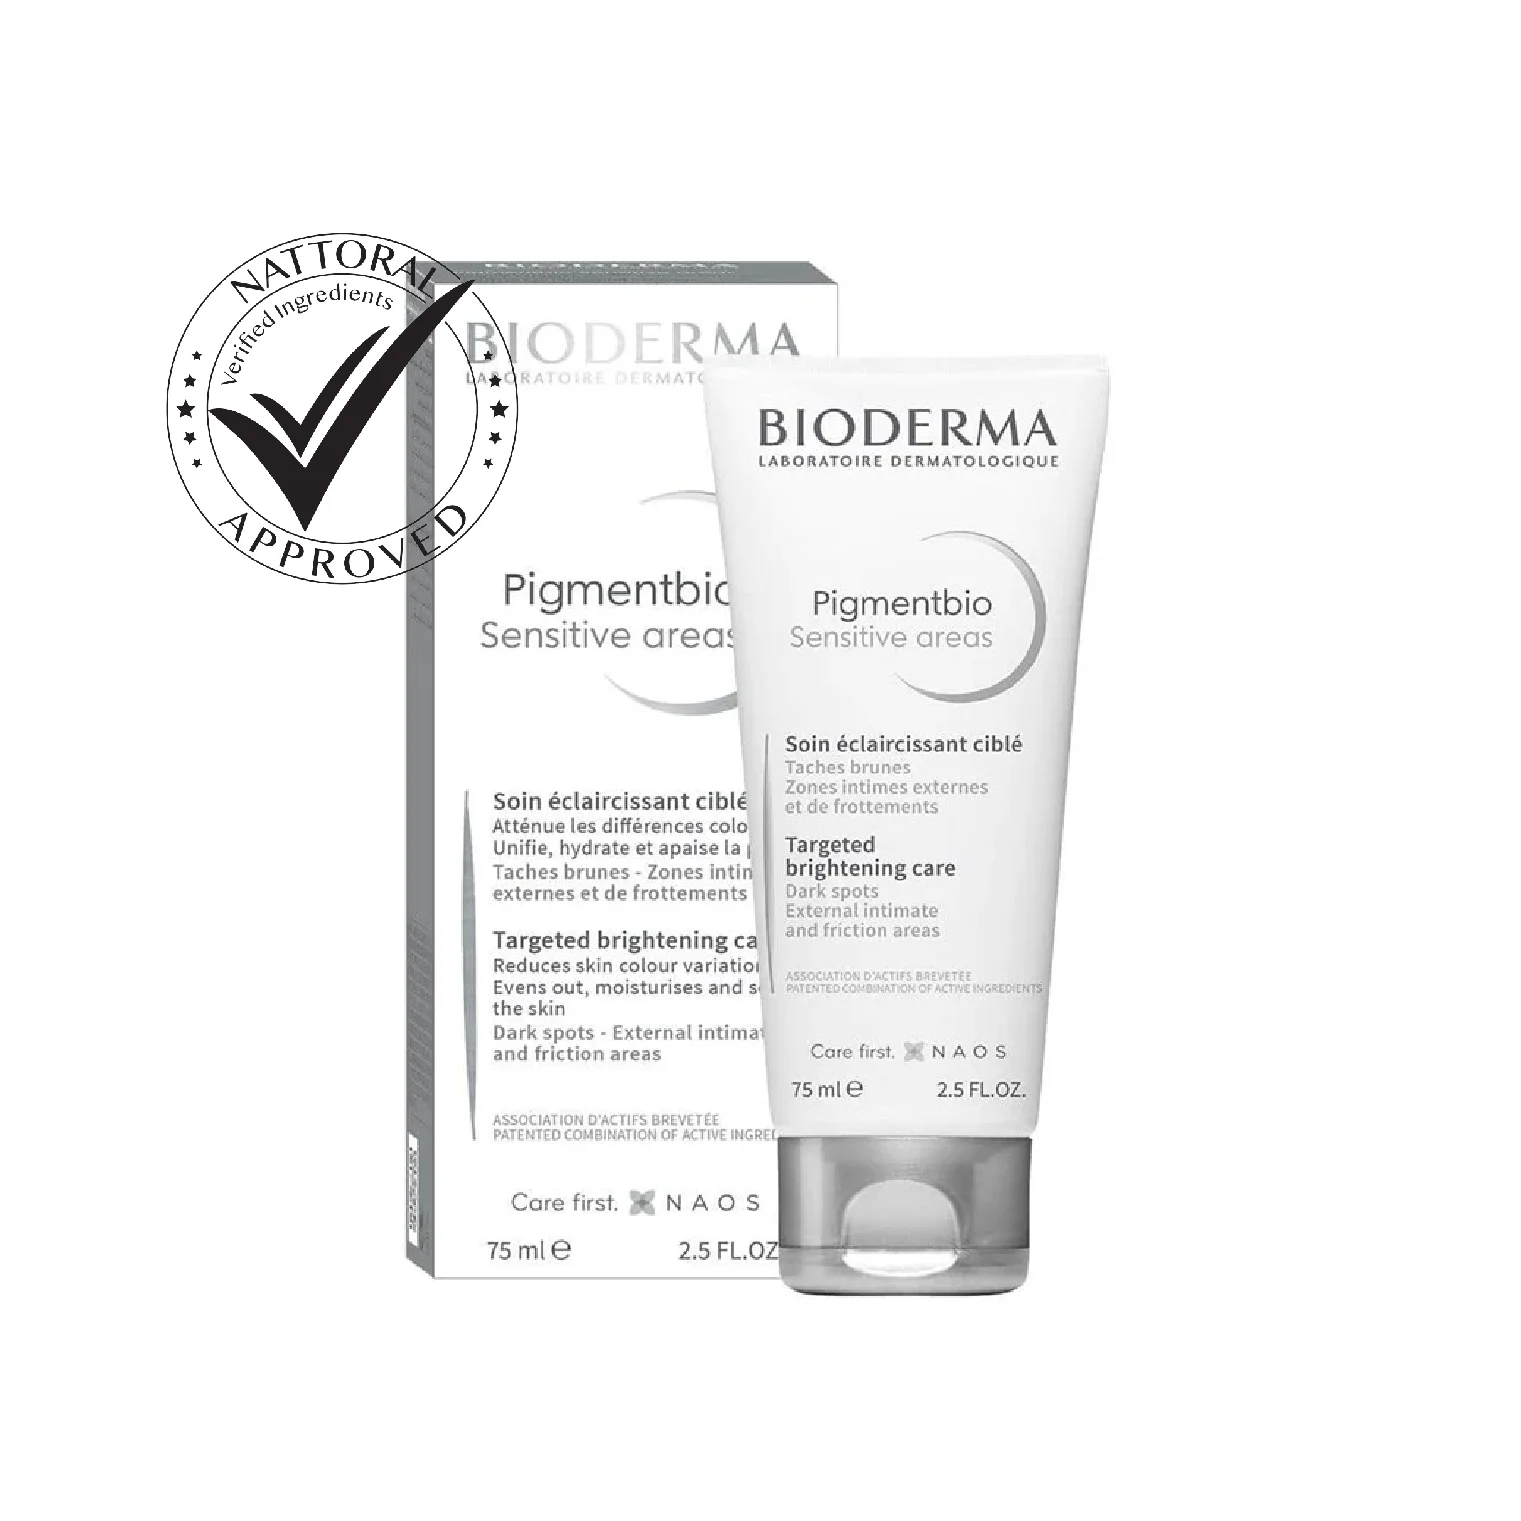 Buy Bioderma Pigmentbio Body Moisturizer To Treat Hyperpigmentation Of  Sensitive Areas for Skin Care Online - Nattoral